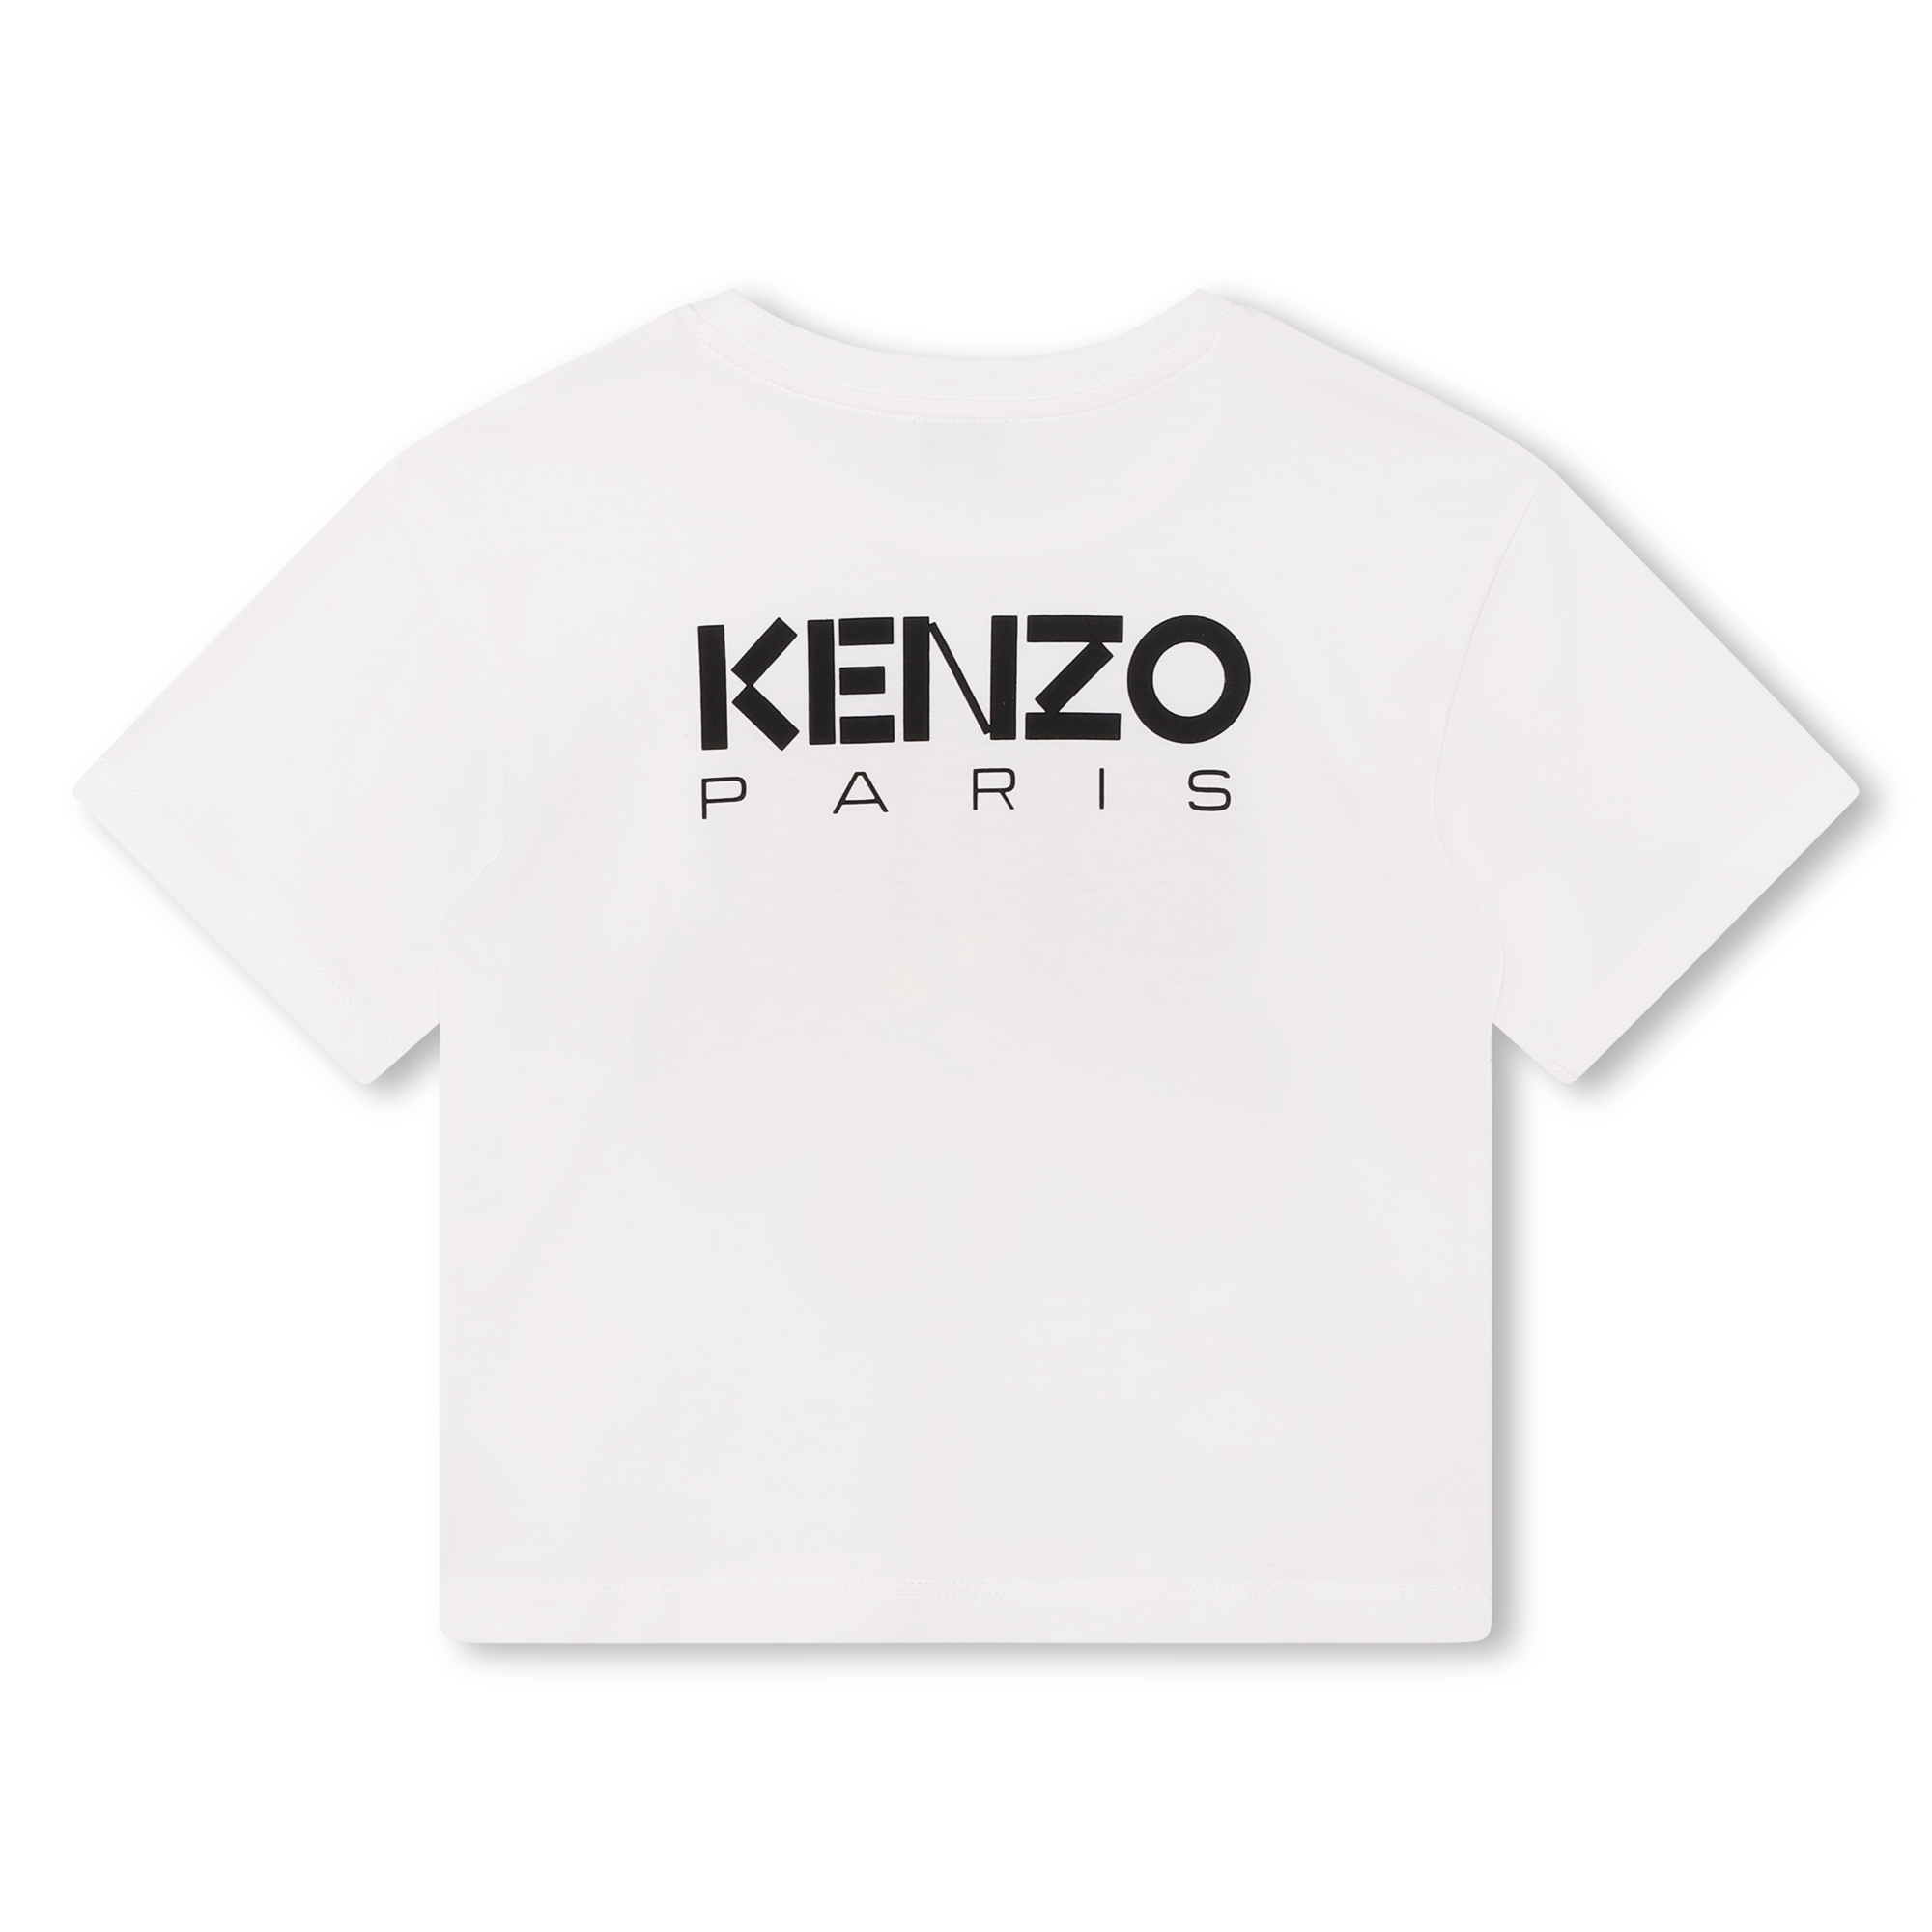 T-shirt serigrafata KENZO KIDS Per BAMBINA